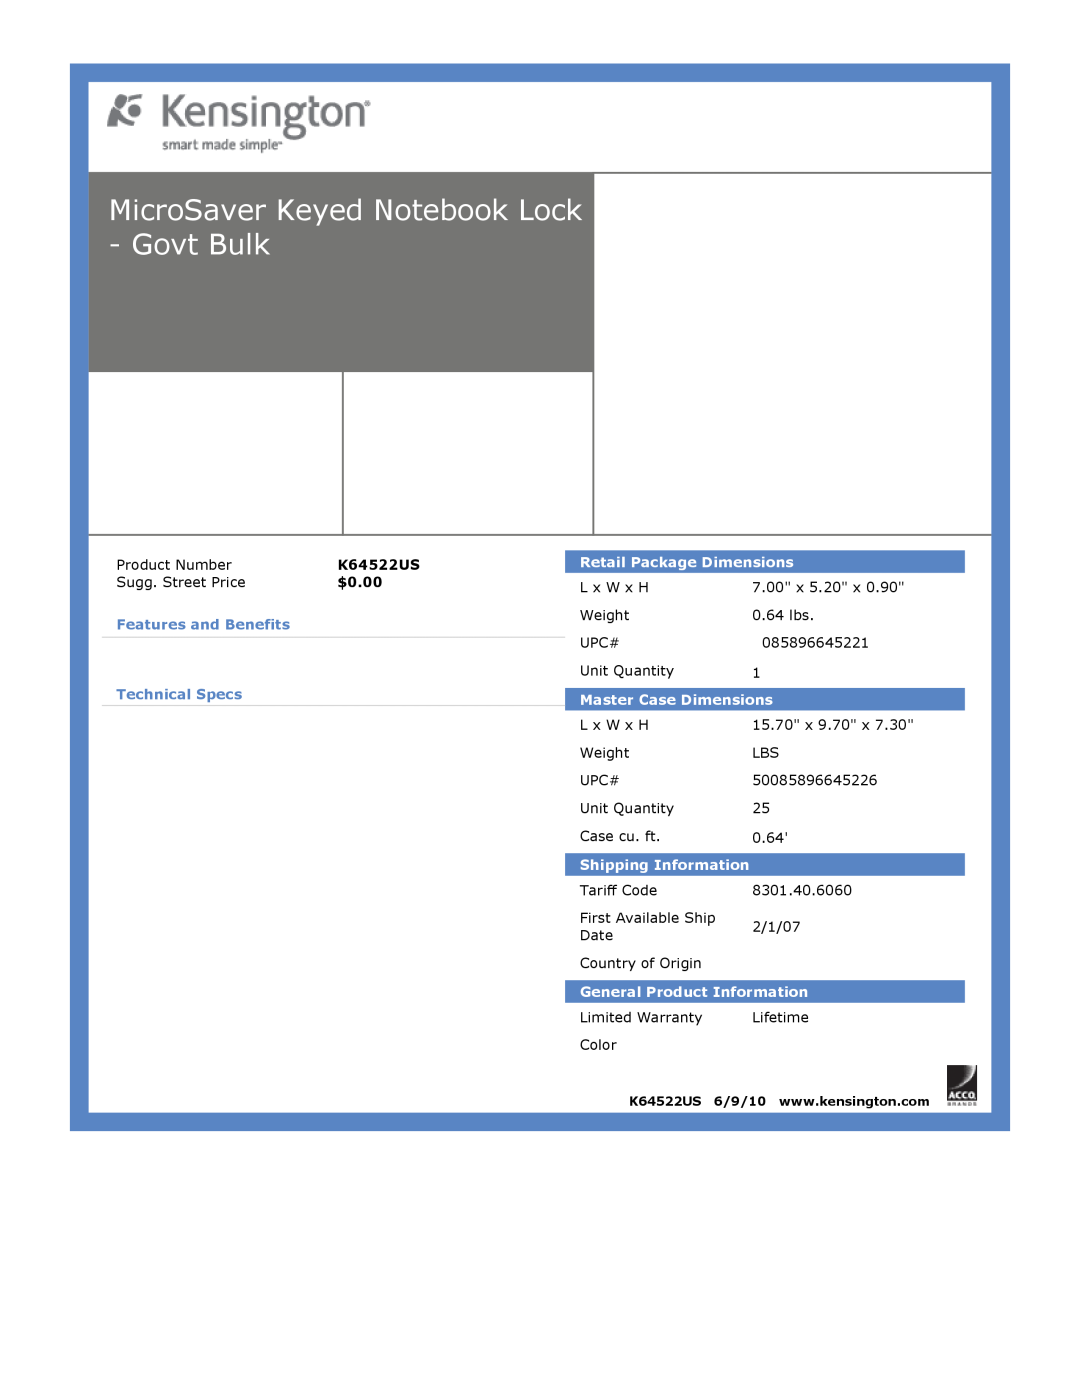 Kensington EU64325 dimensions MicroSaver Keyed Notebook Lock - Govt Bulk, $0.00, Features and Benefits Technical Specs 